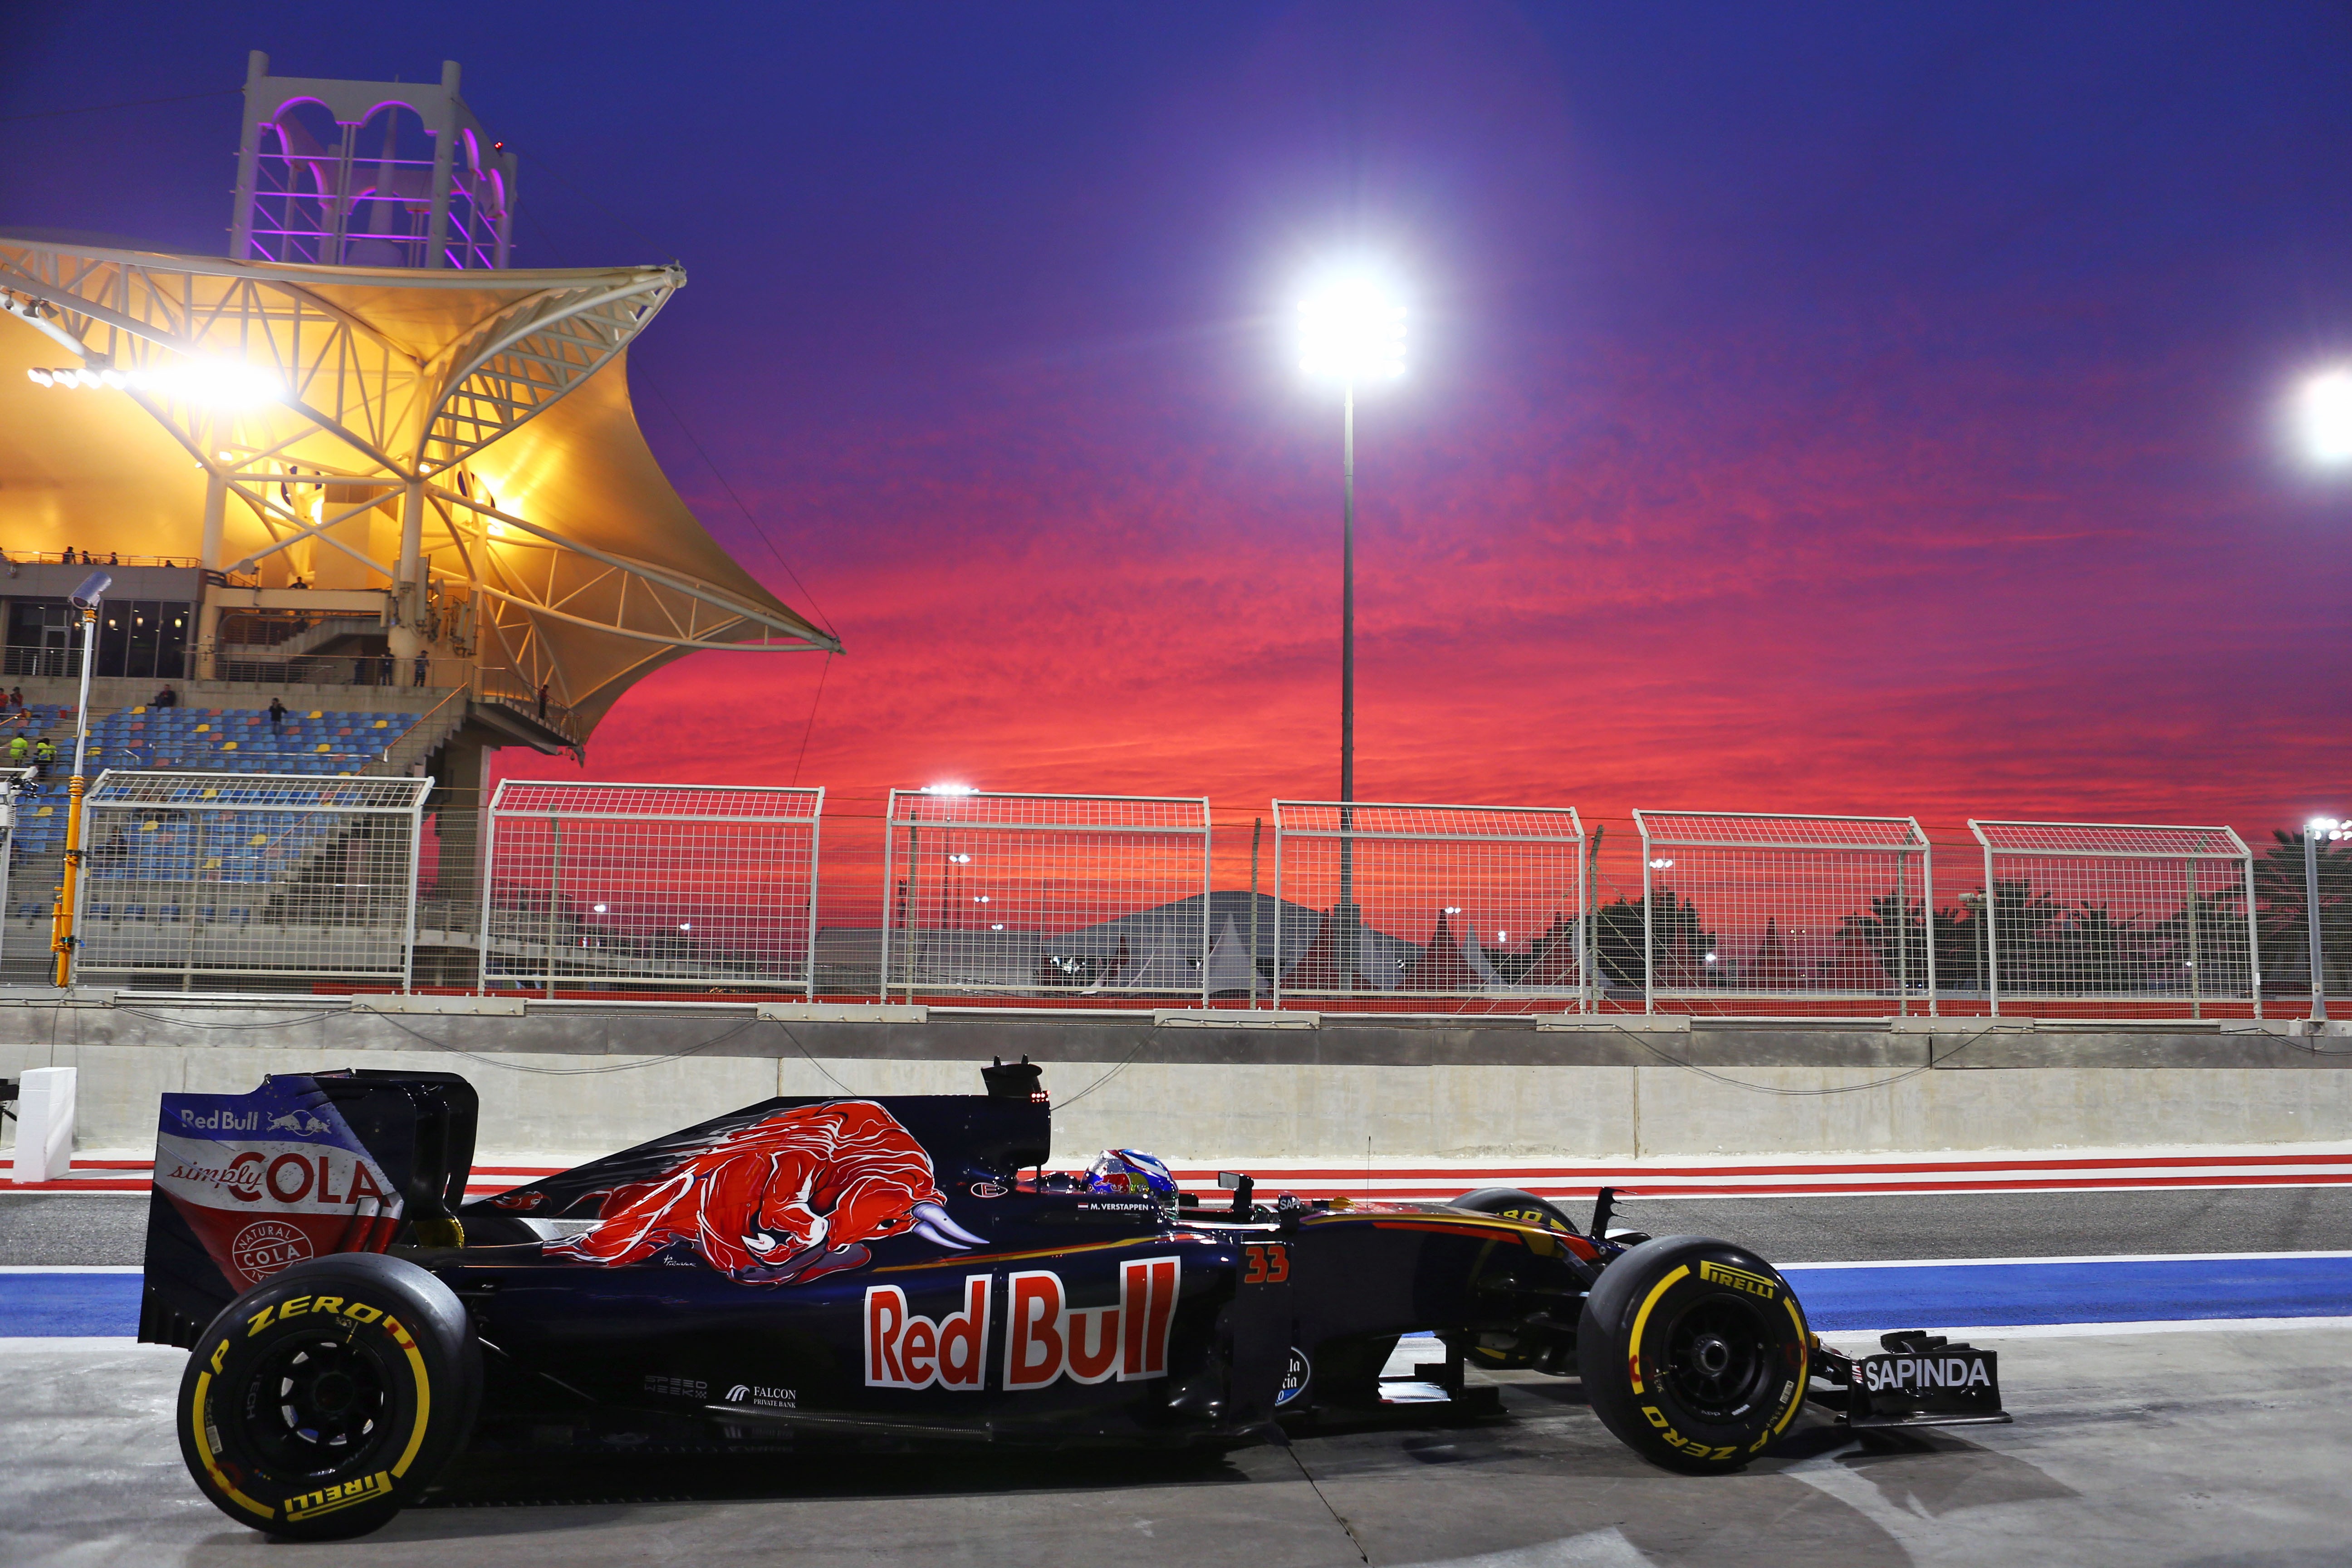 General 5184x3456 Formula 1 Red Bull Racing Toro Rosso racing sport race tracks motorsport vehicle race cars